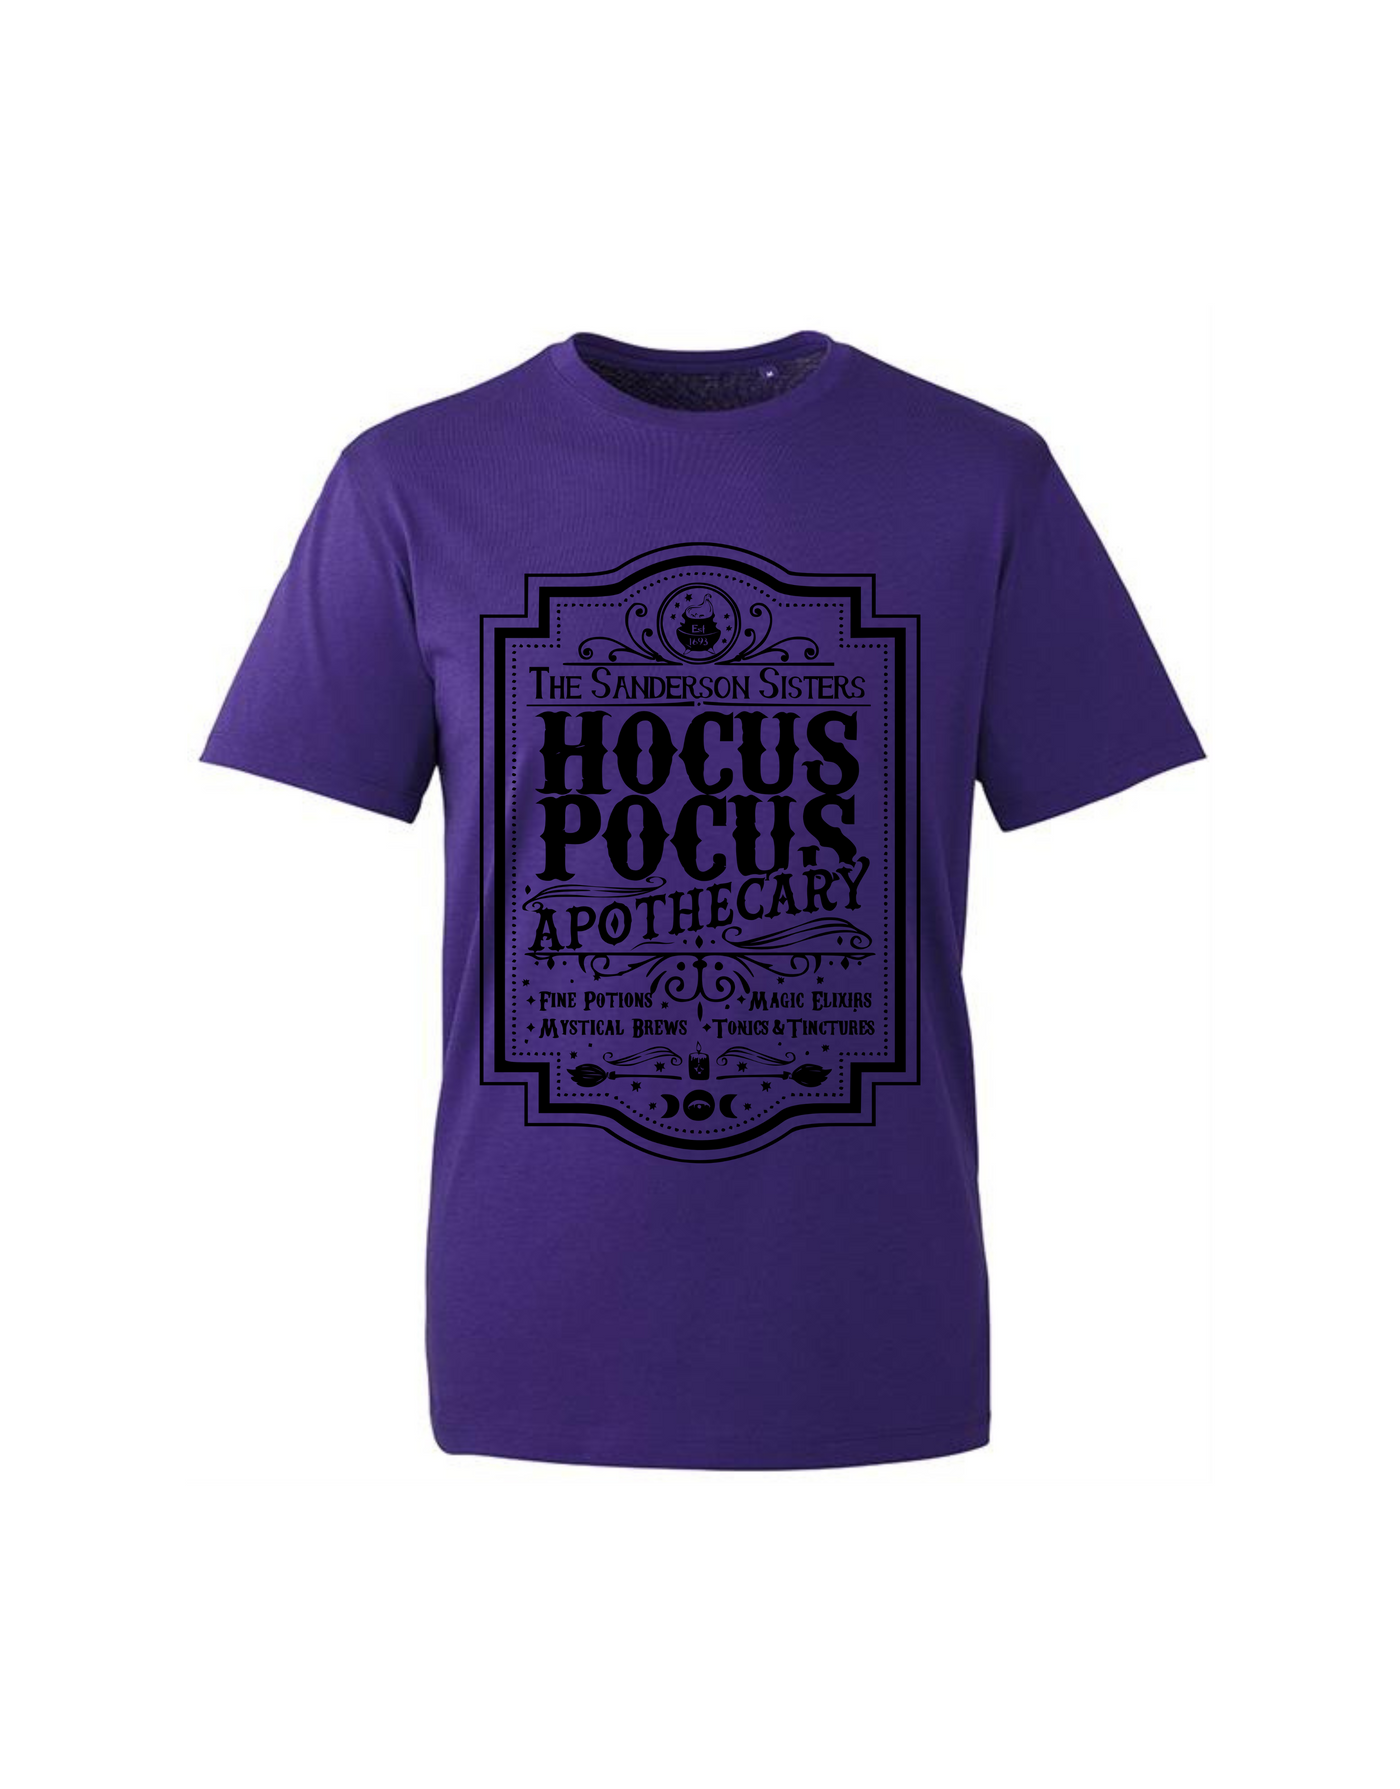 Purple "Hocus Pocus Apothecary” Unisex Slogan T-Shirt